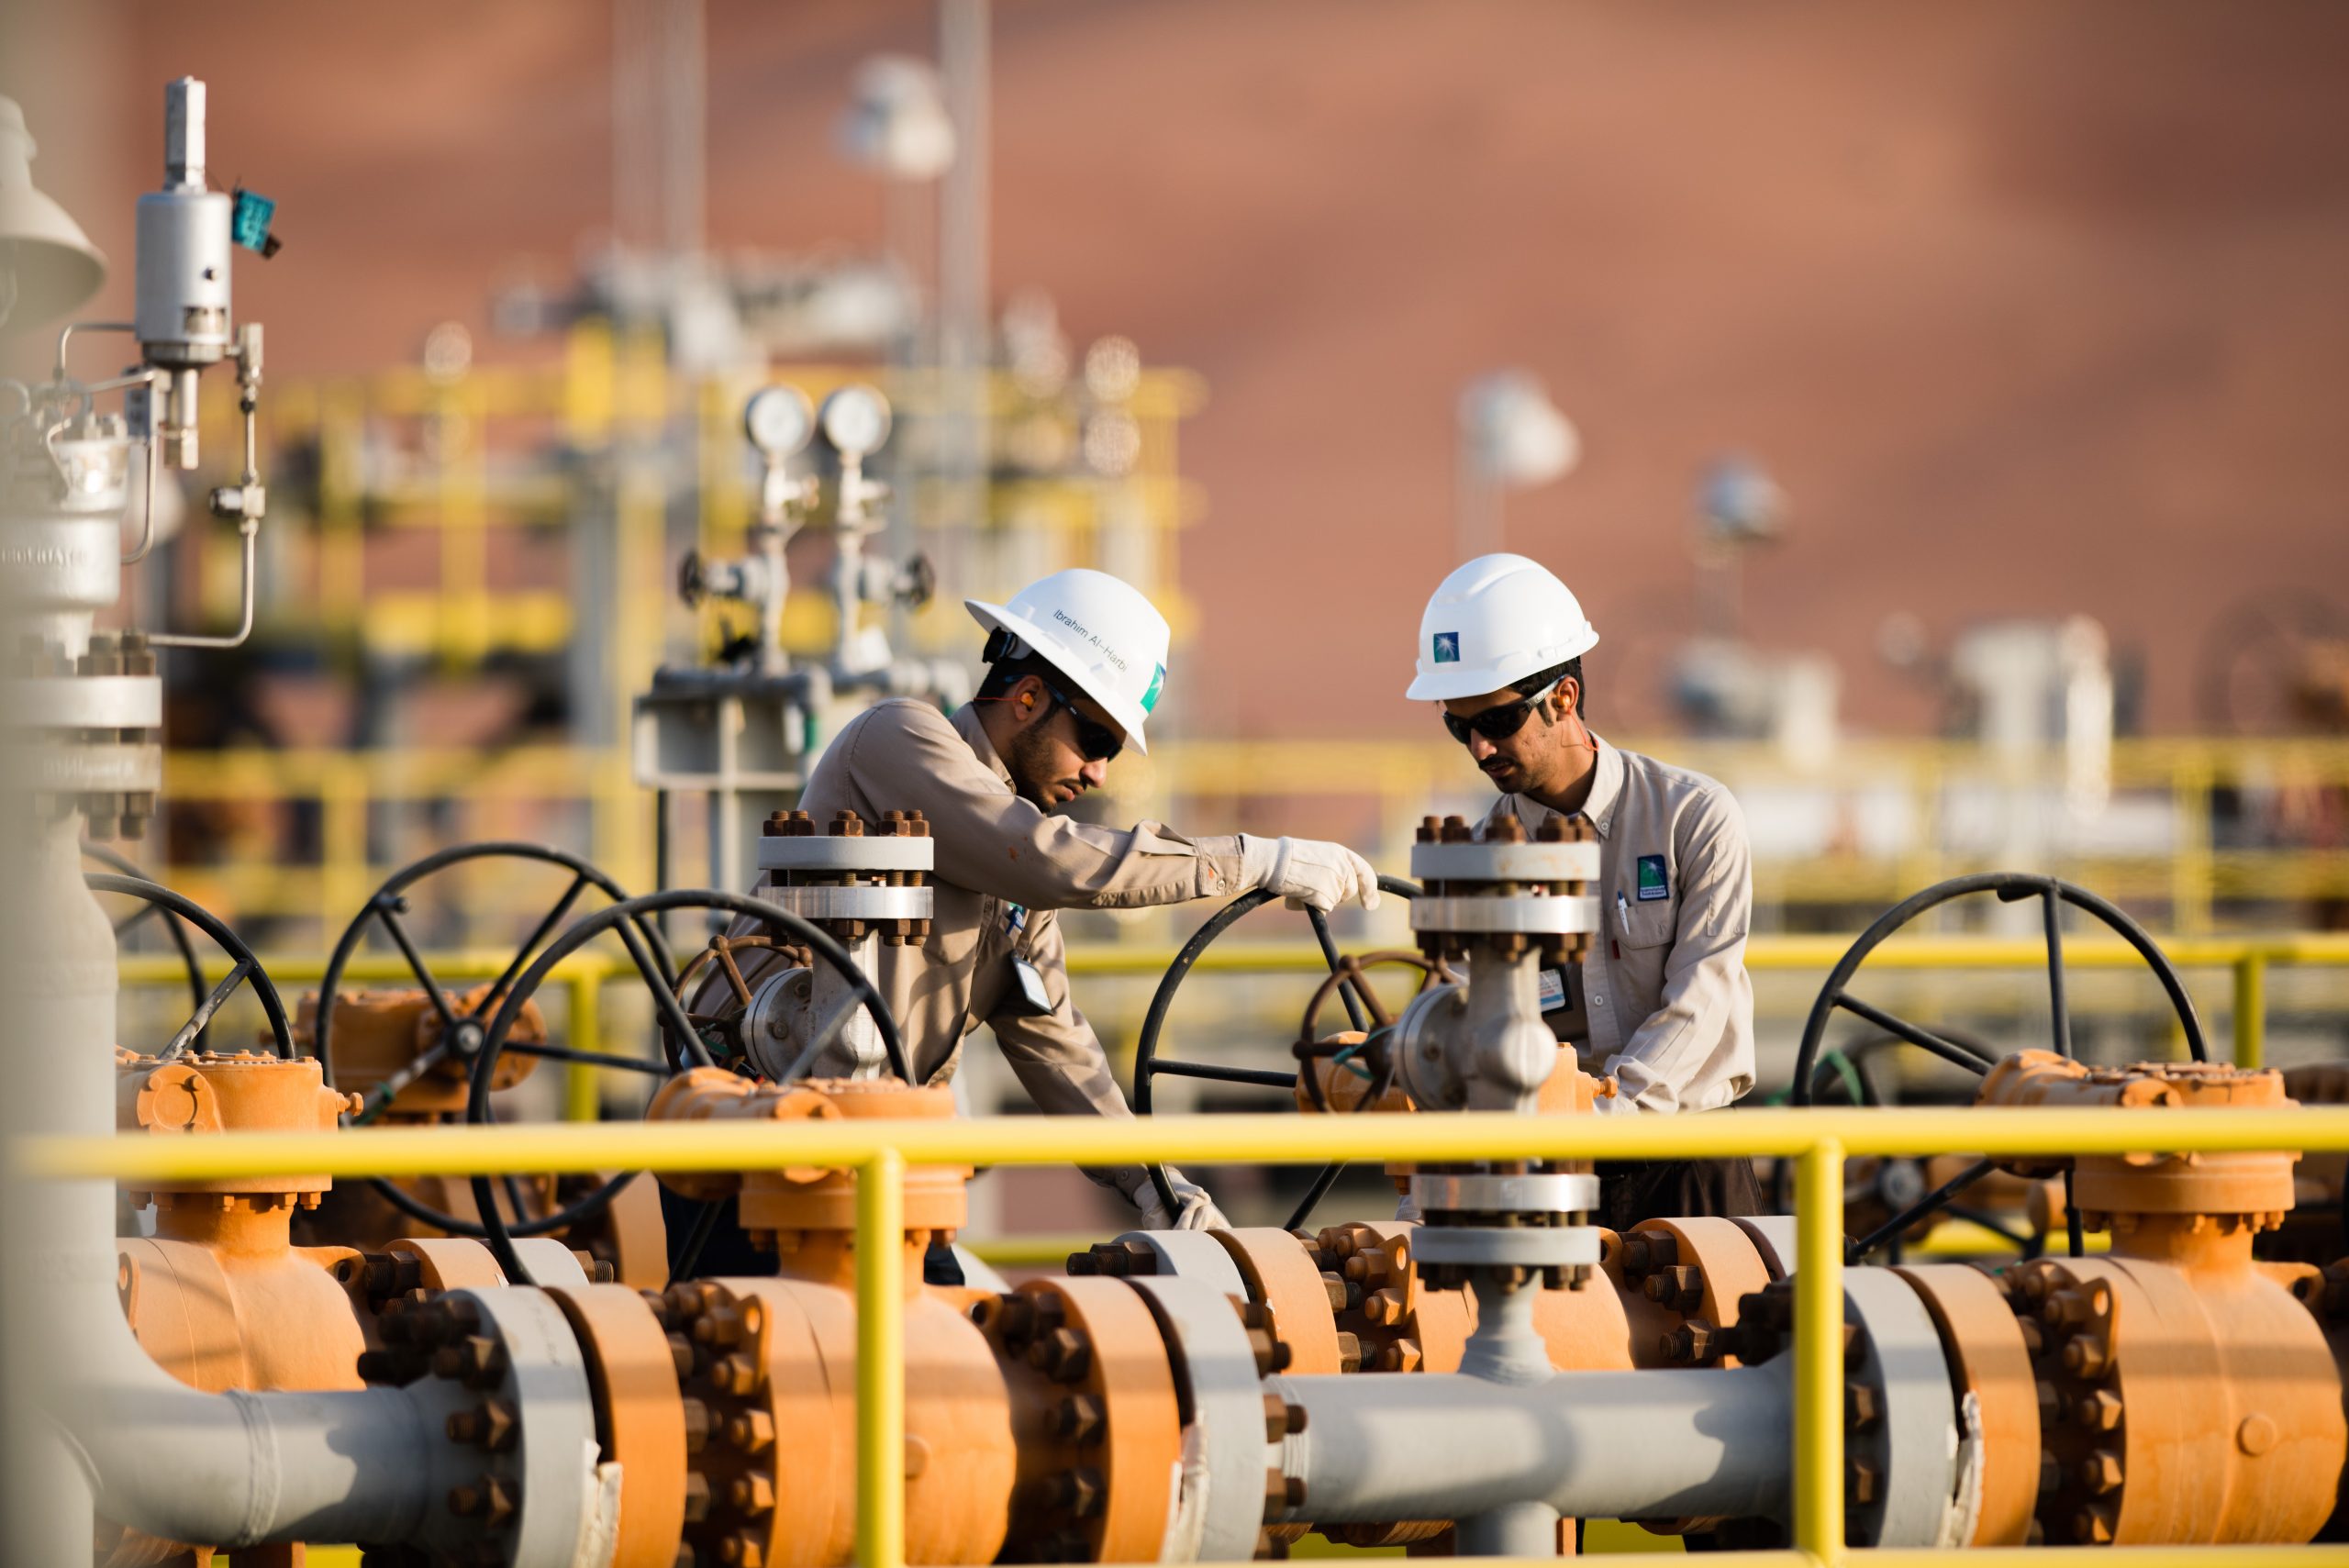 Harga minyak turun, investor tunggu kebijakan OPEC+ dan fokus ke Arab Saudi